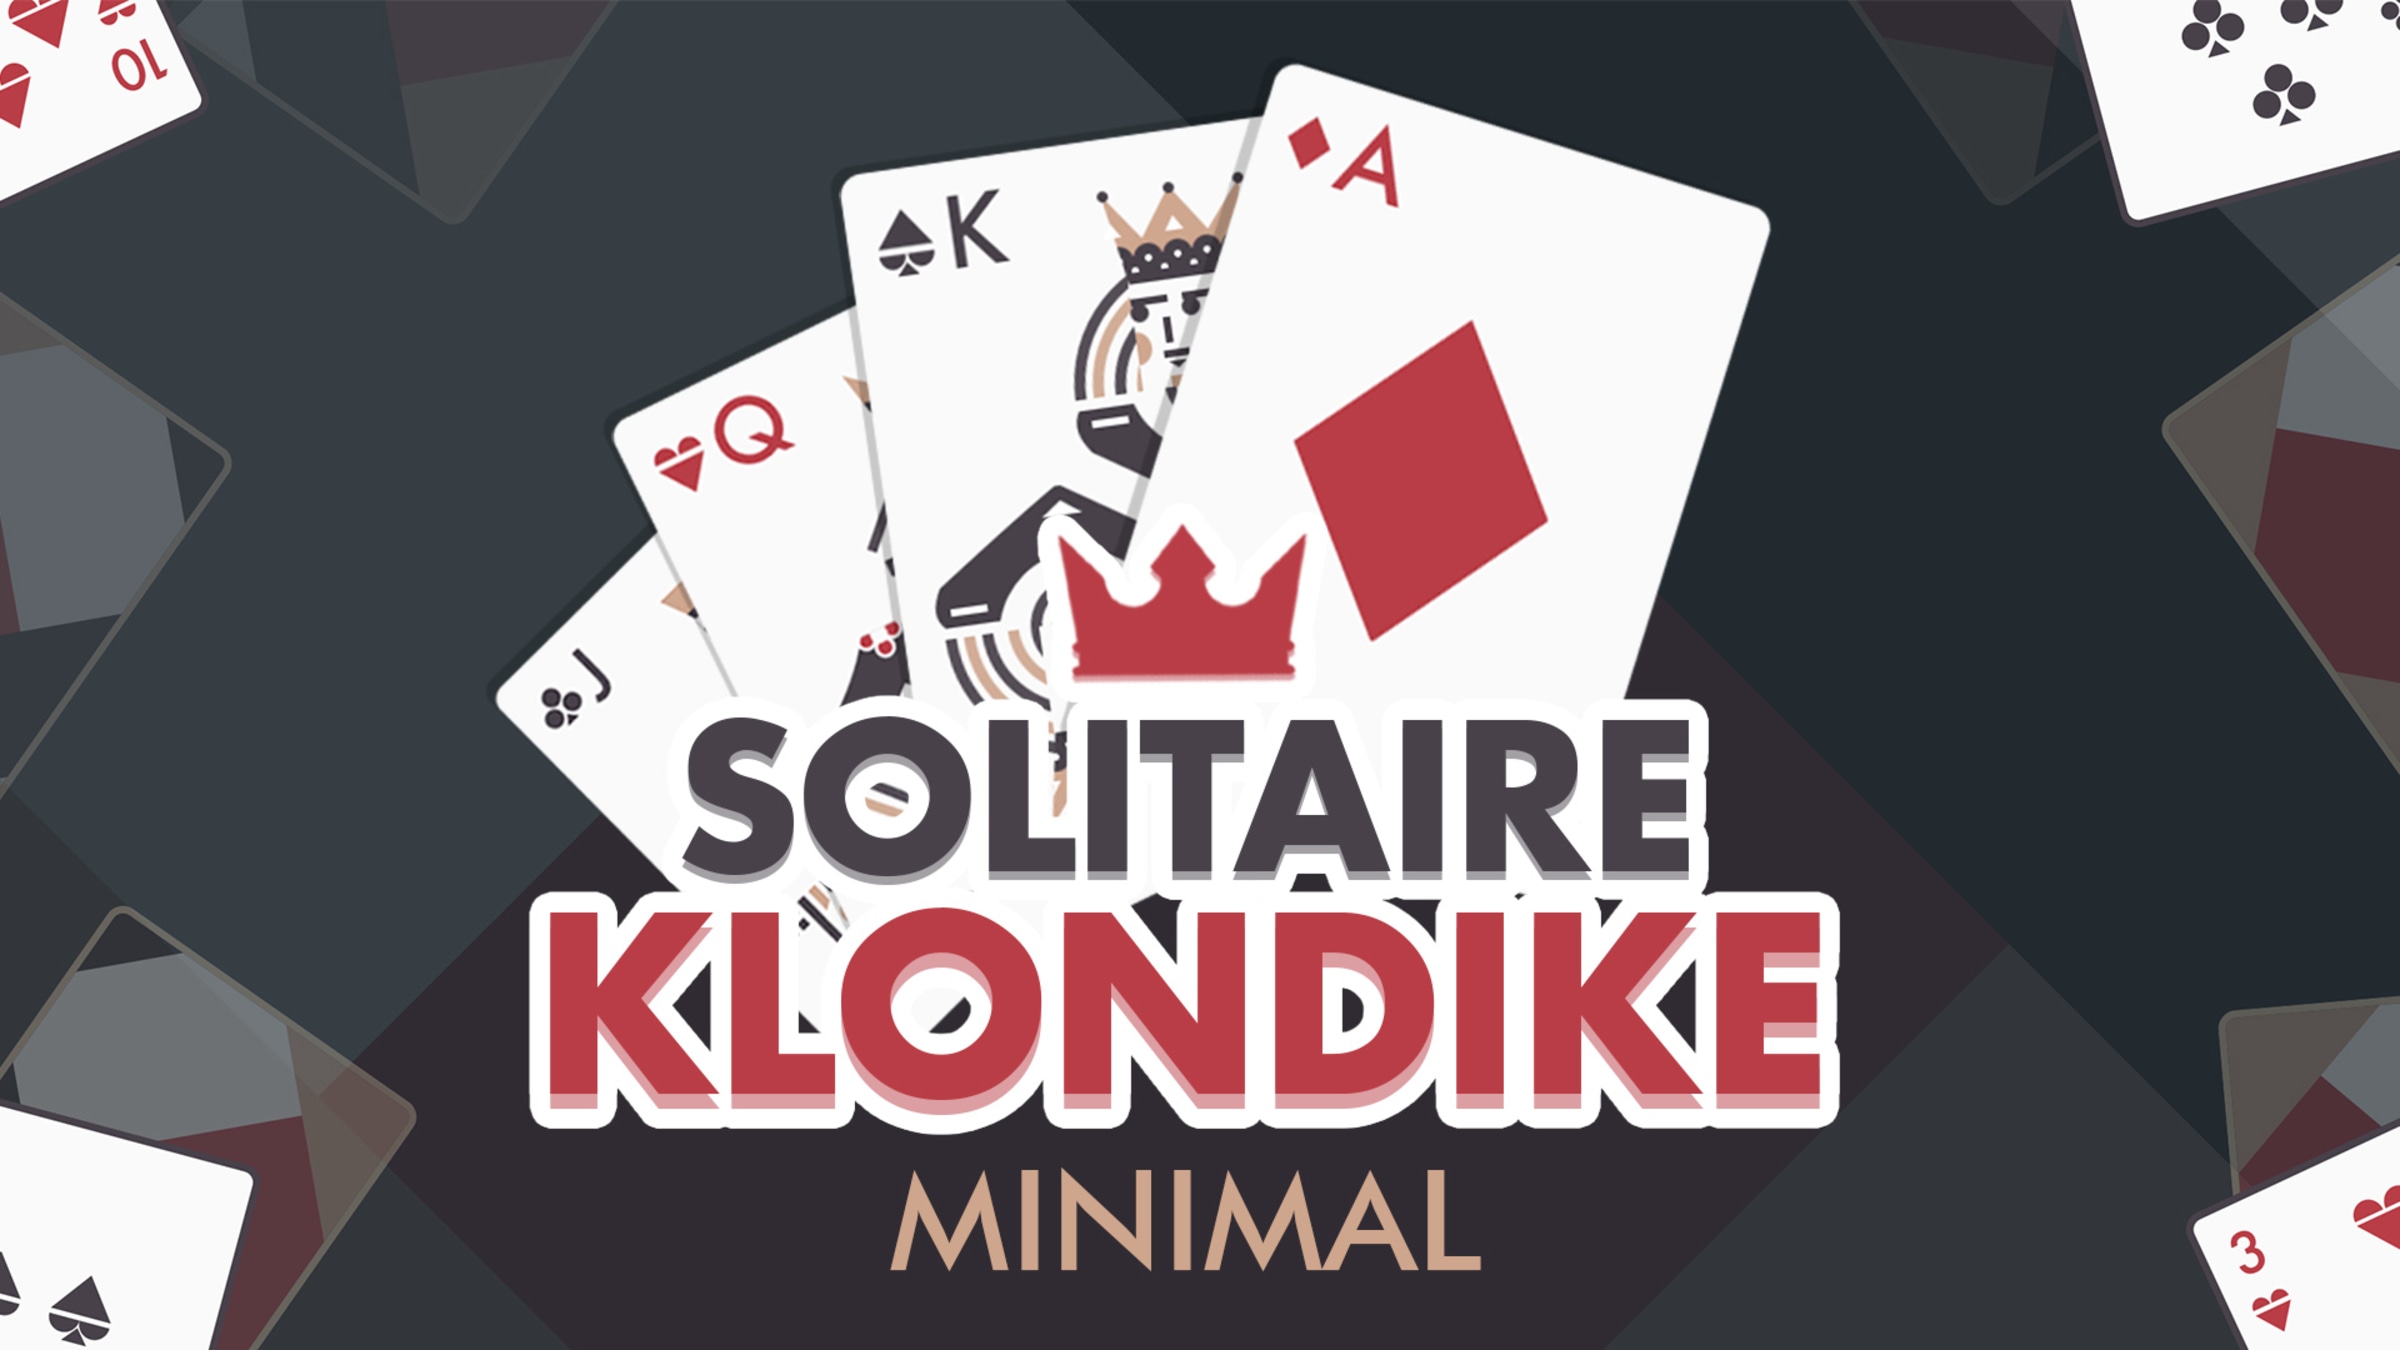 Klondike Solitaire - Play Online & 100% Free